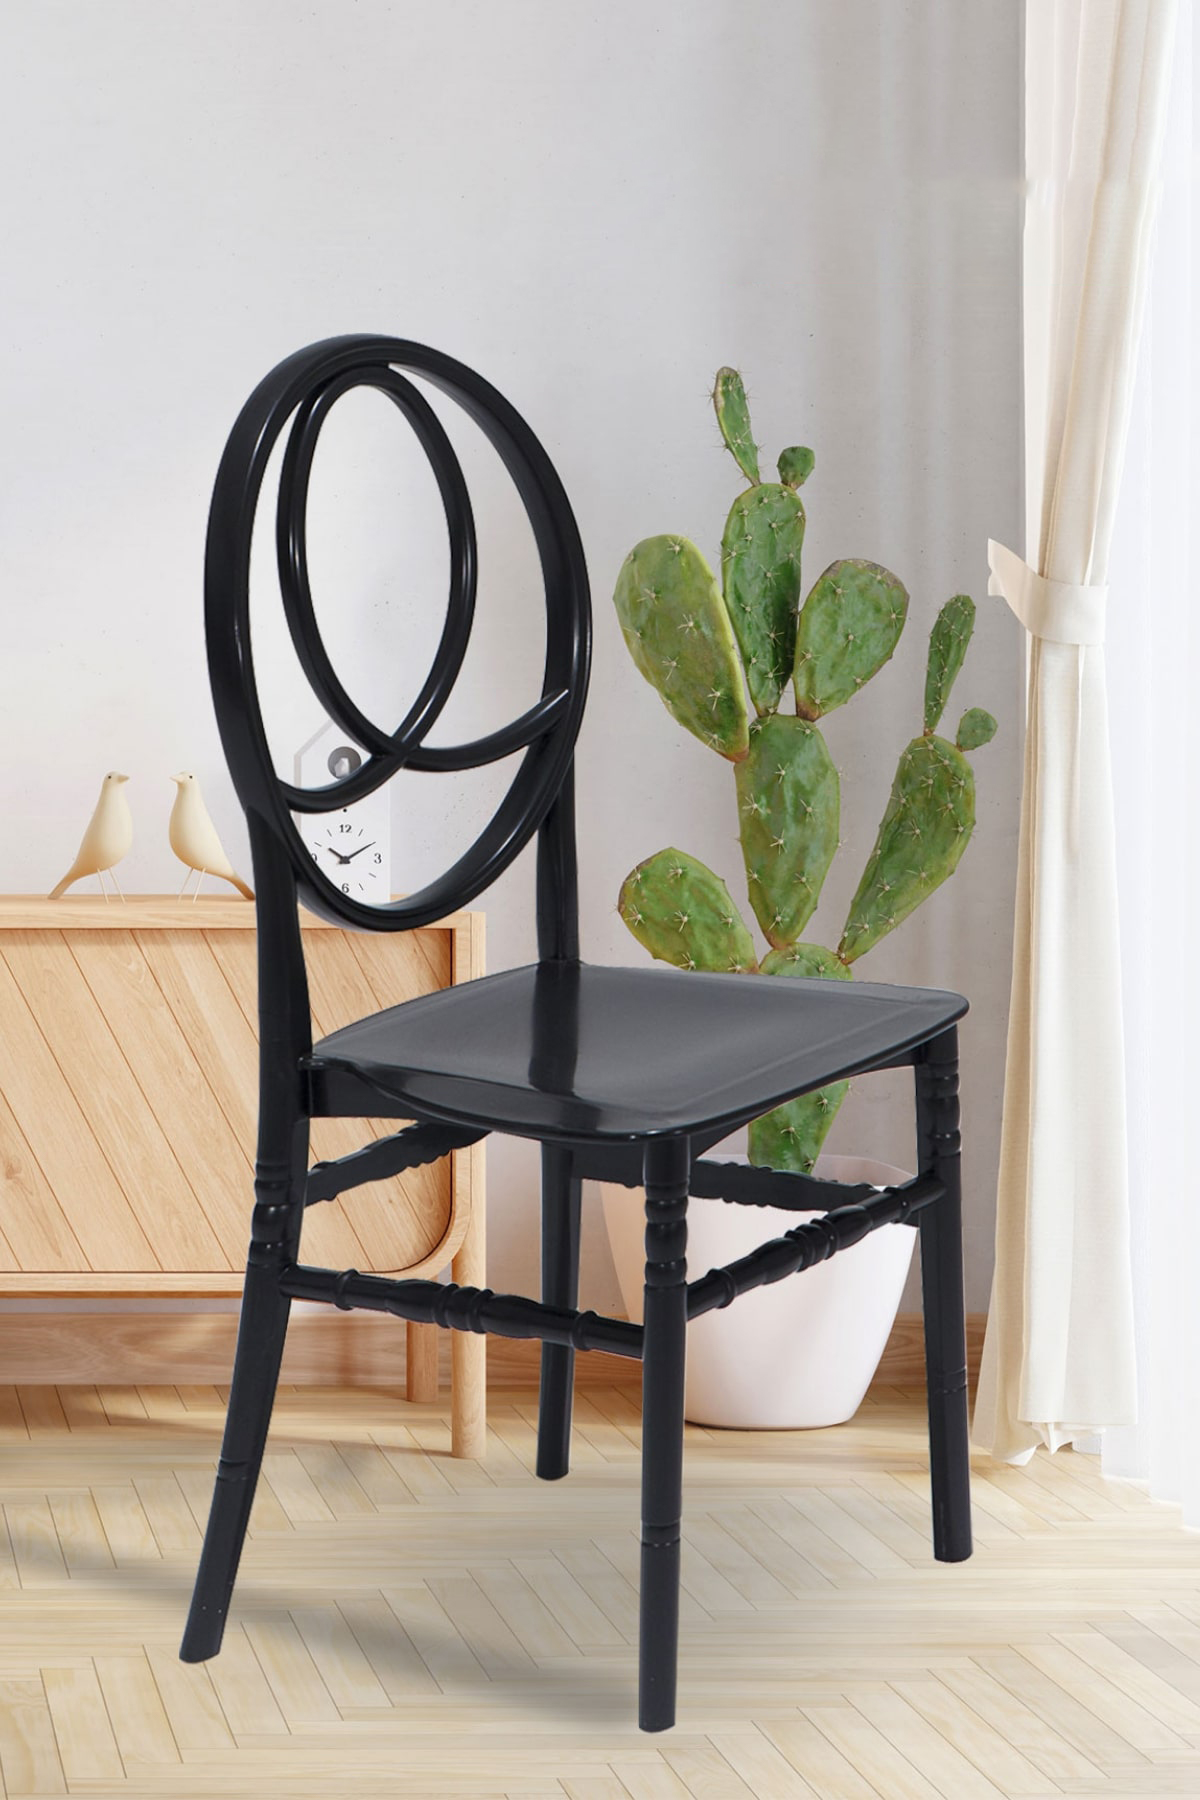 6 Pcs. Phoenix Black Chairs / Balcony-Garden-Kitchen